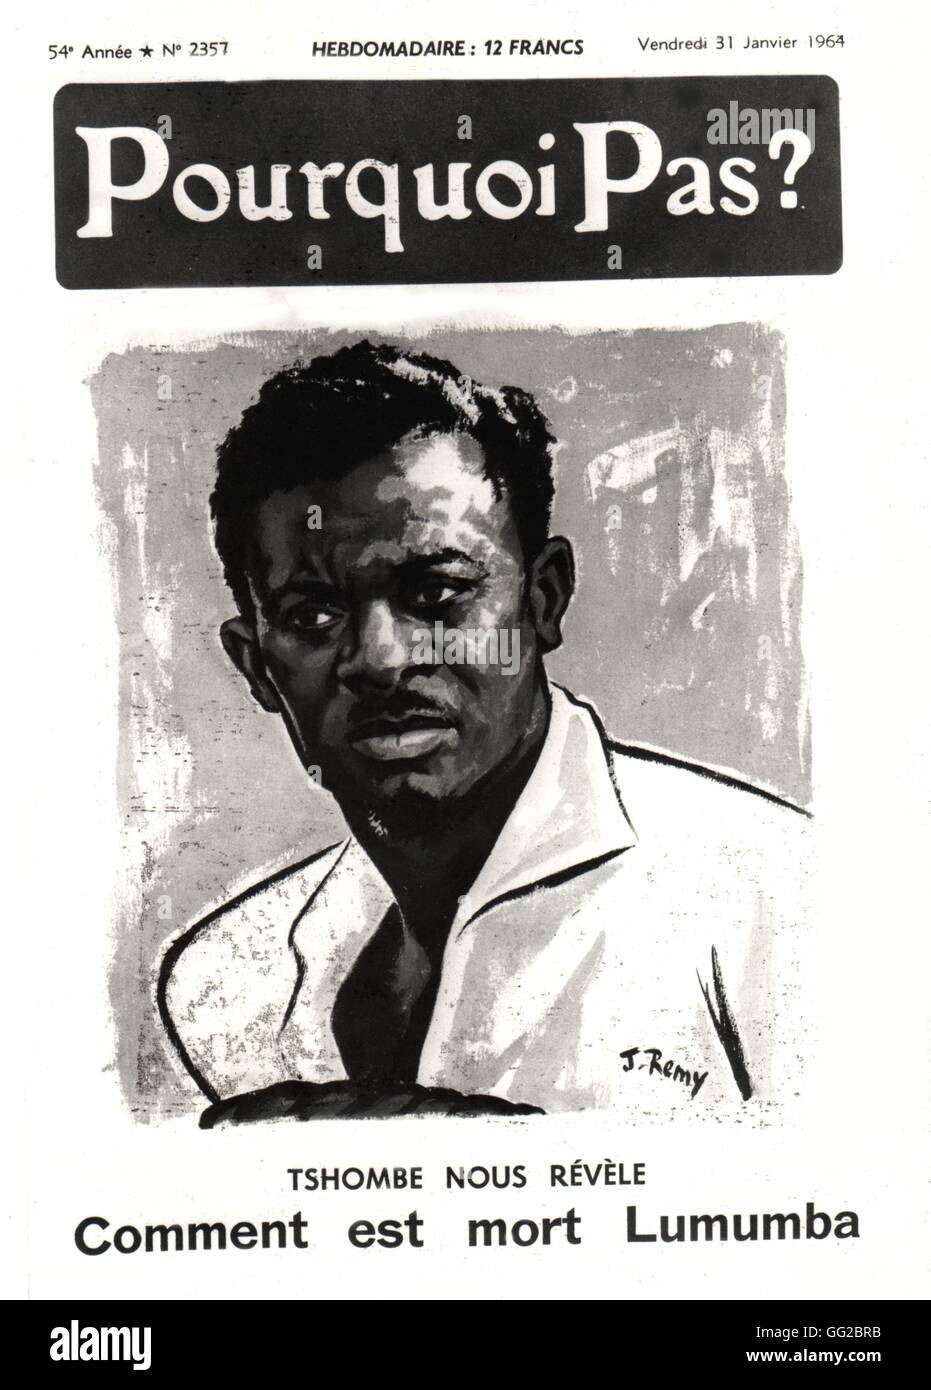 Giornale "Pourquoi Pas?', Tshombe racconta come Patrice Lumumba morì. 31-1-1964 Congo (Zaire) Foto Stock